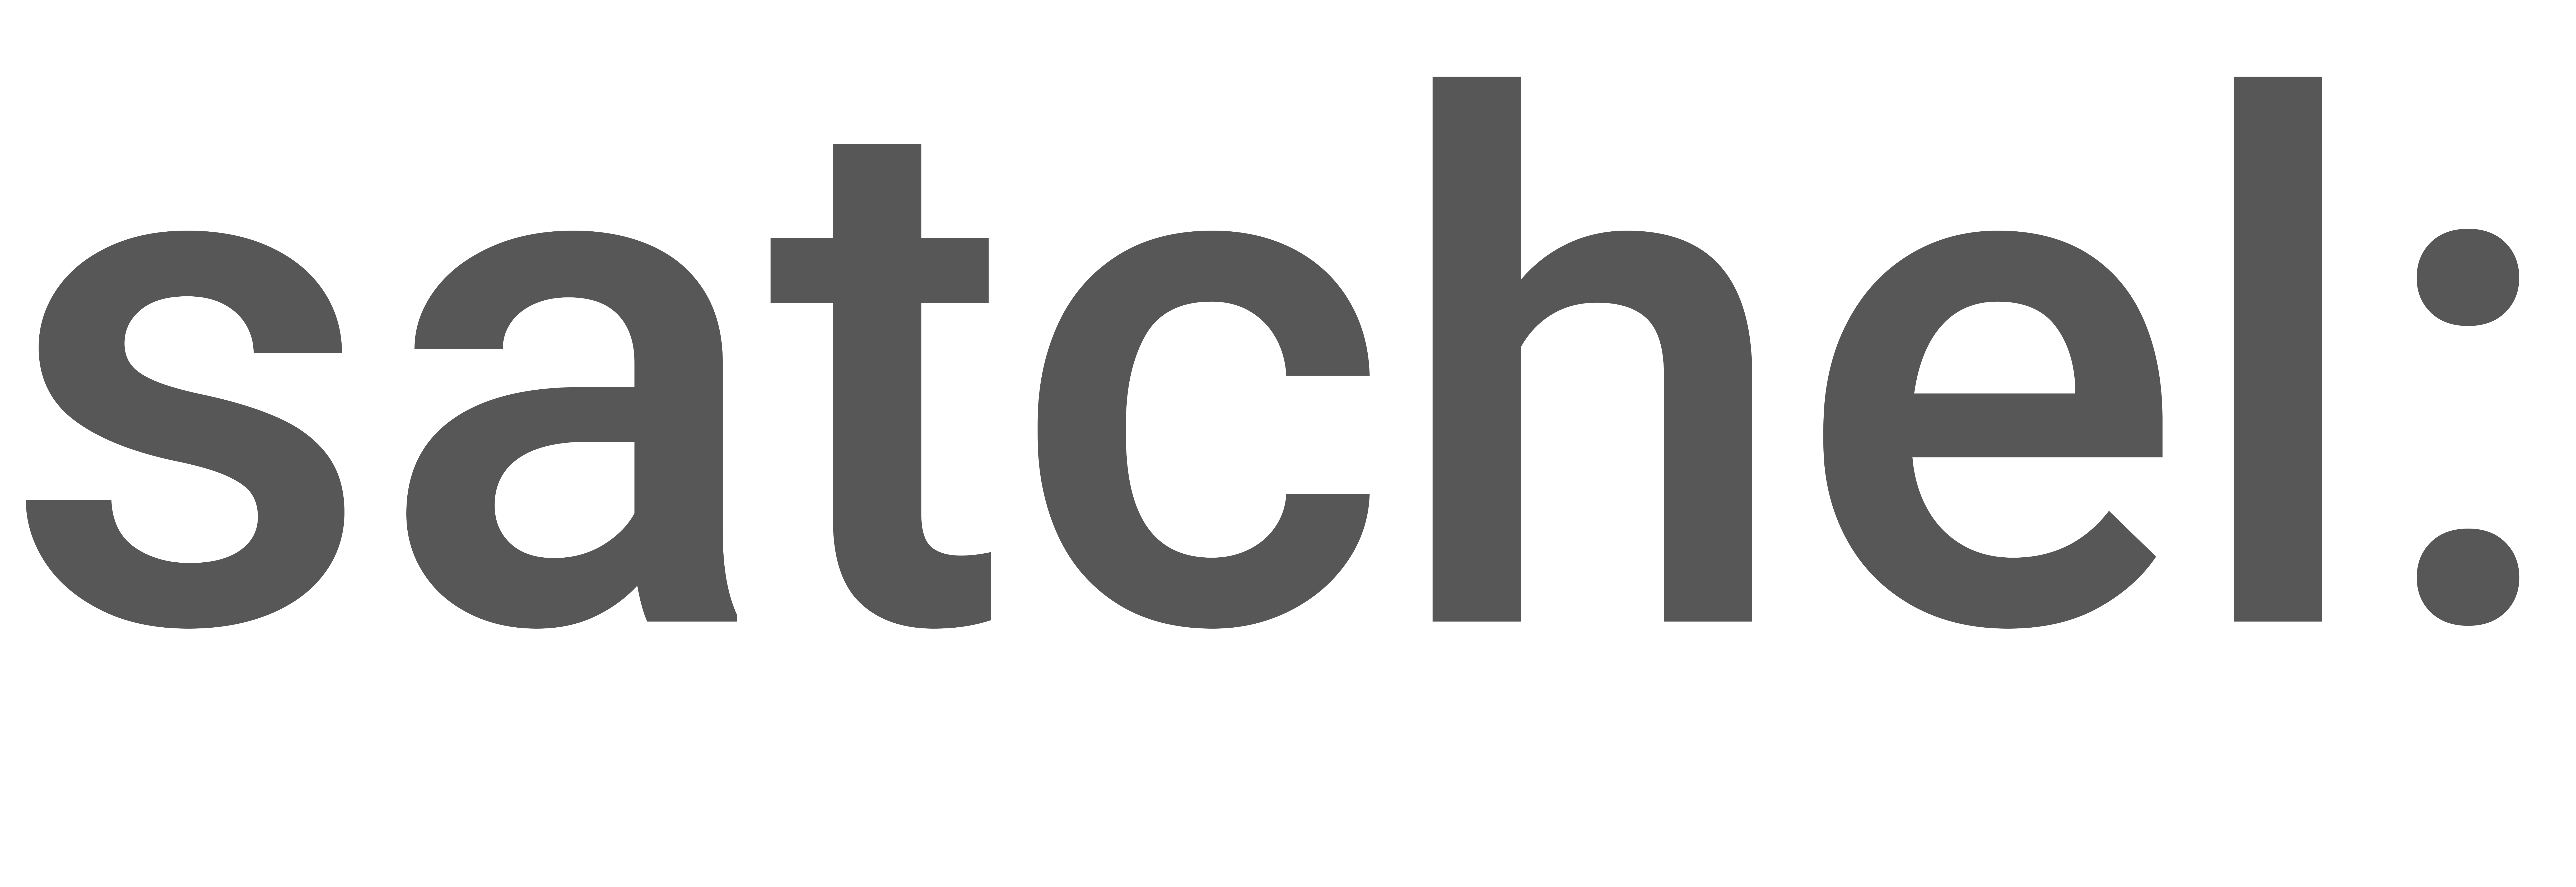 Logo - Satchel Grey - High Res-1